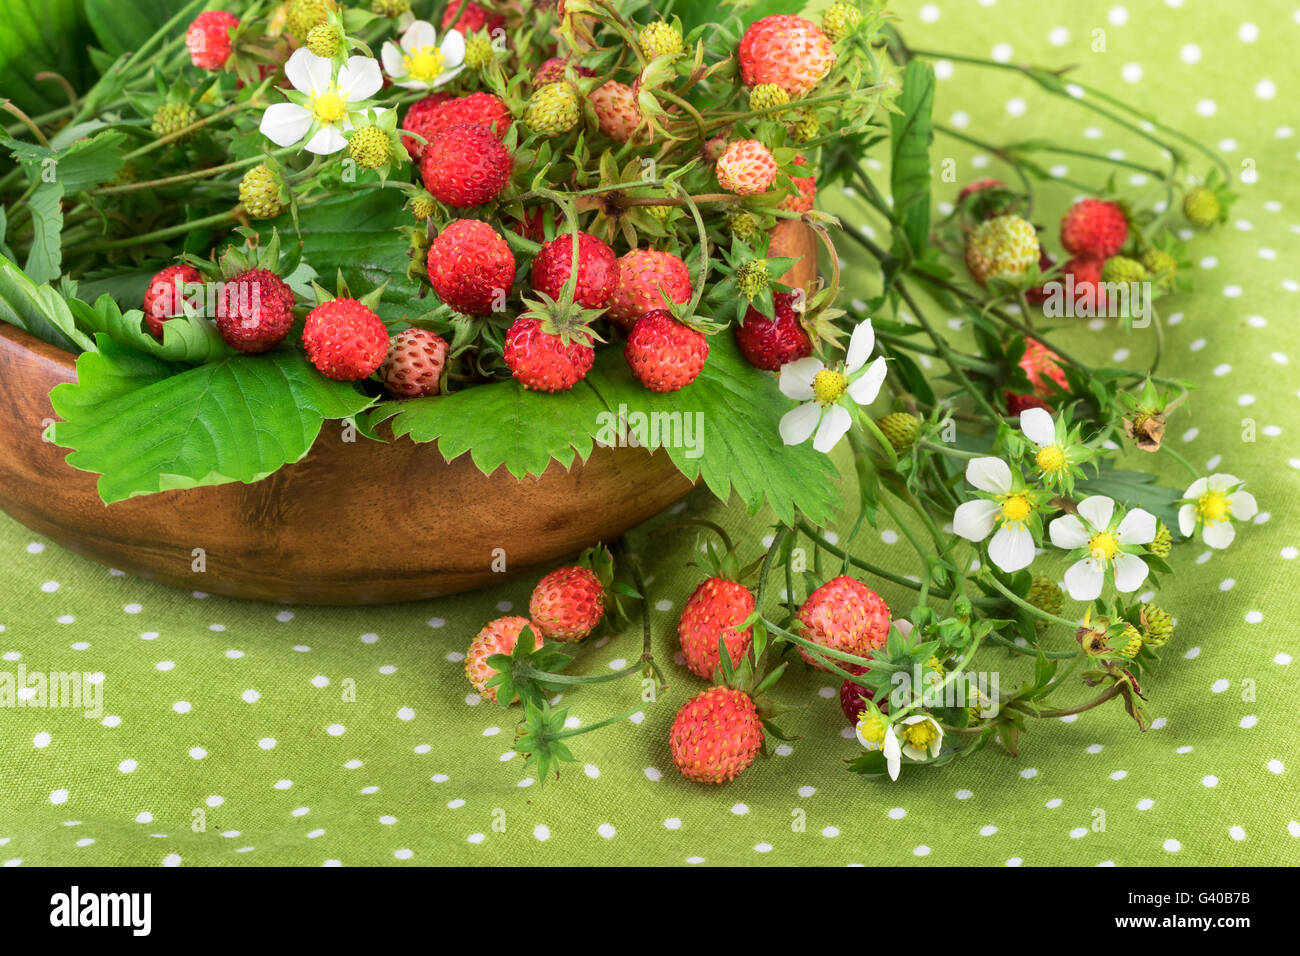 Wild strawberries on green polka dot background. Bowl with woodland strawberries on rustic background. Stock Photo